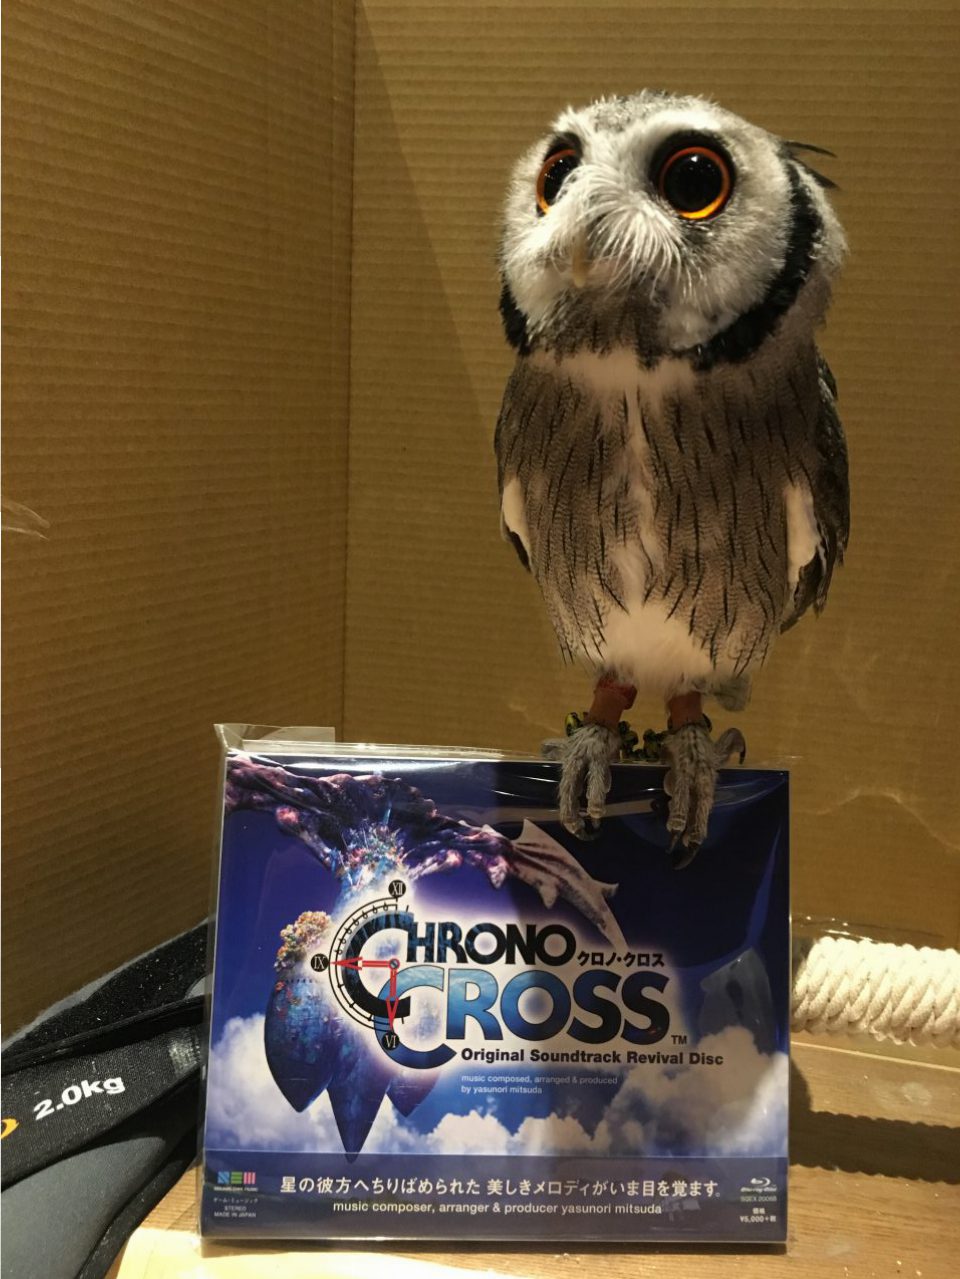 CHRONO CROSS Rev. OST